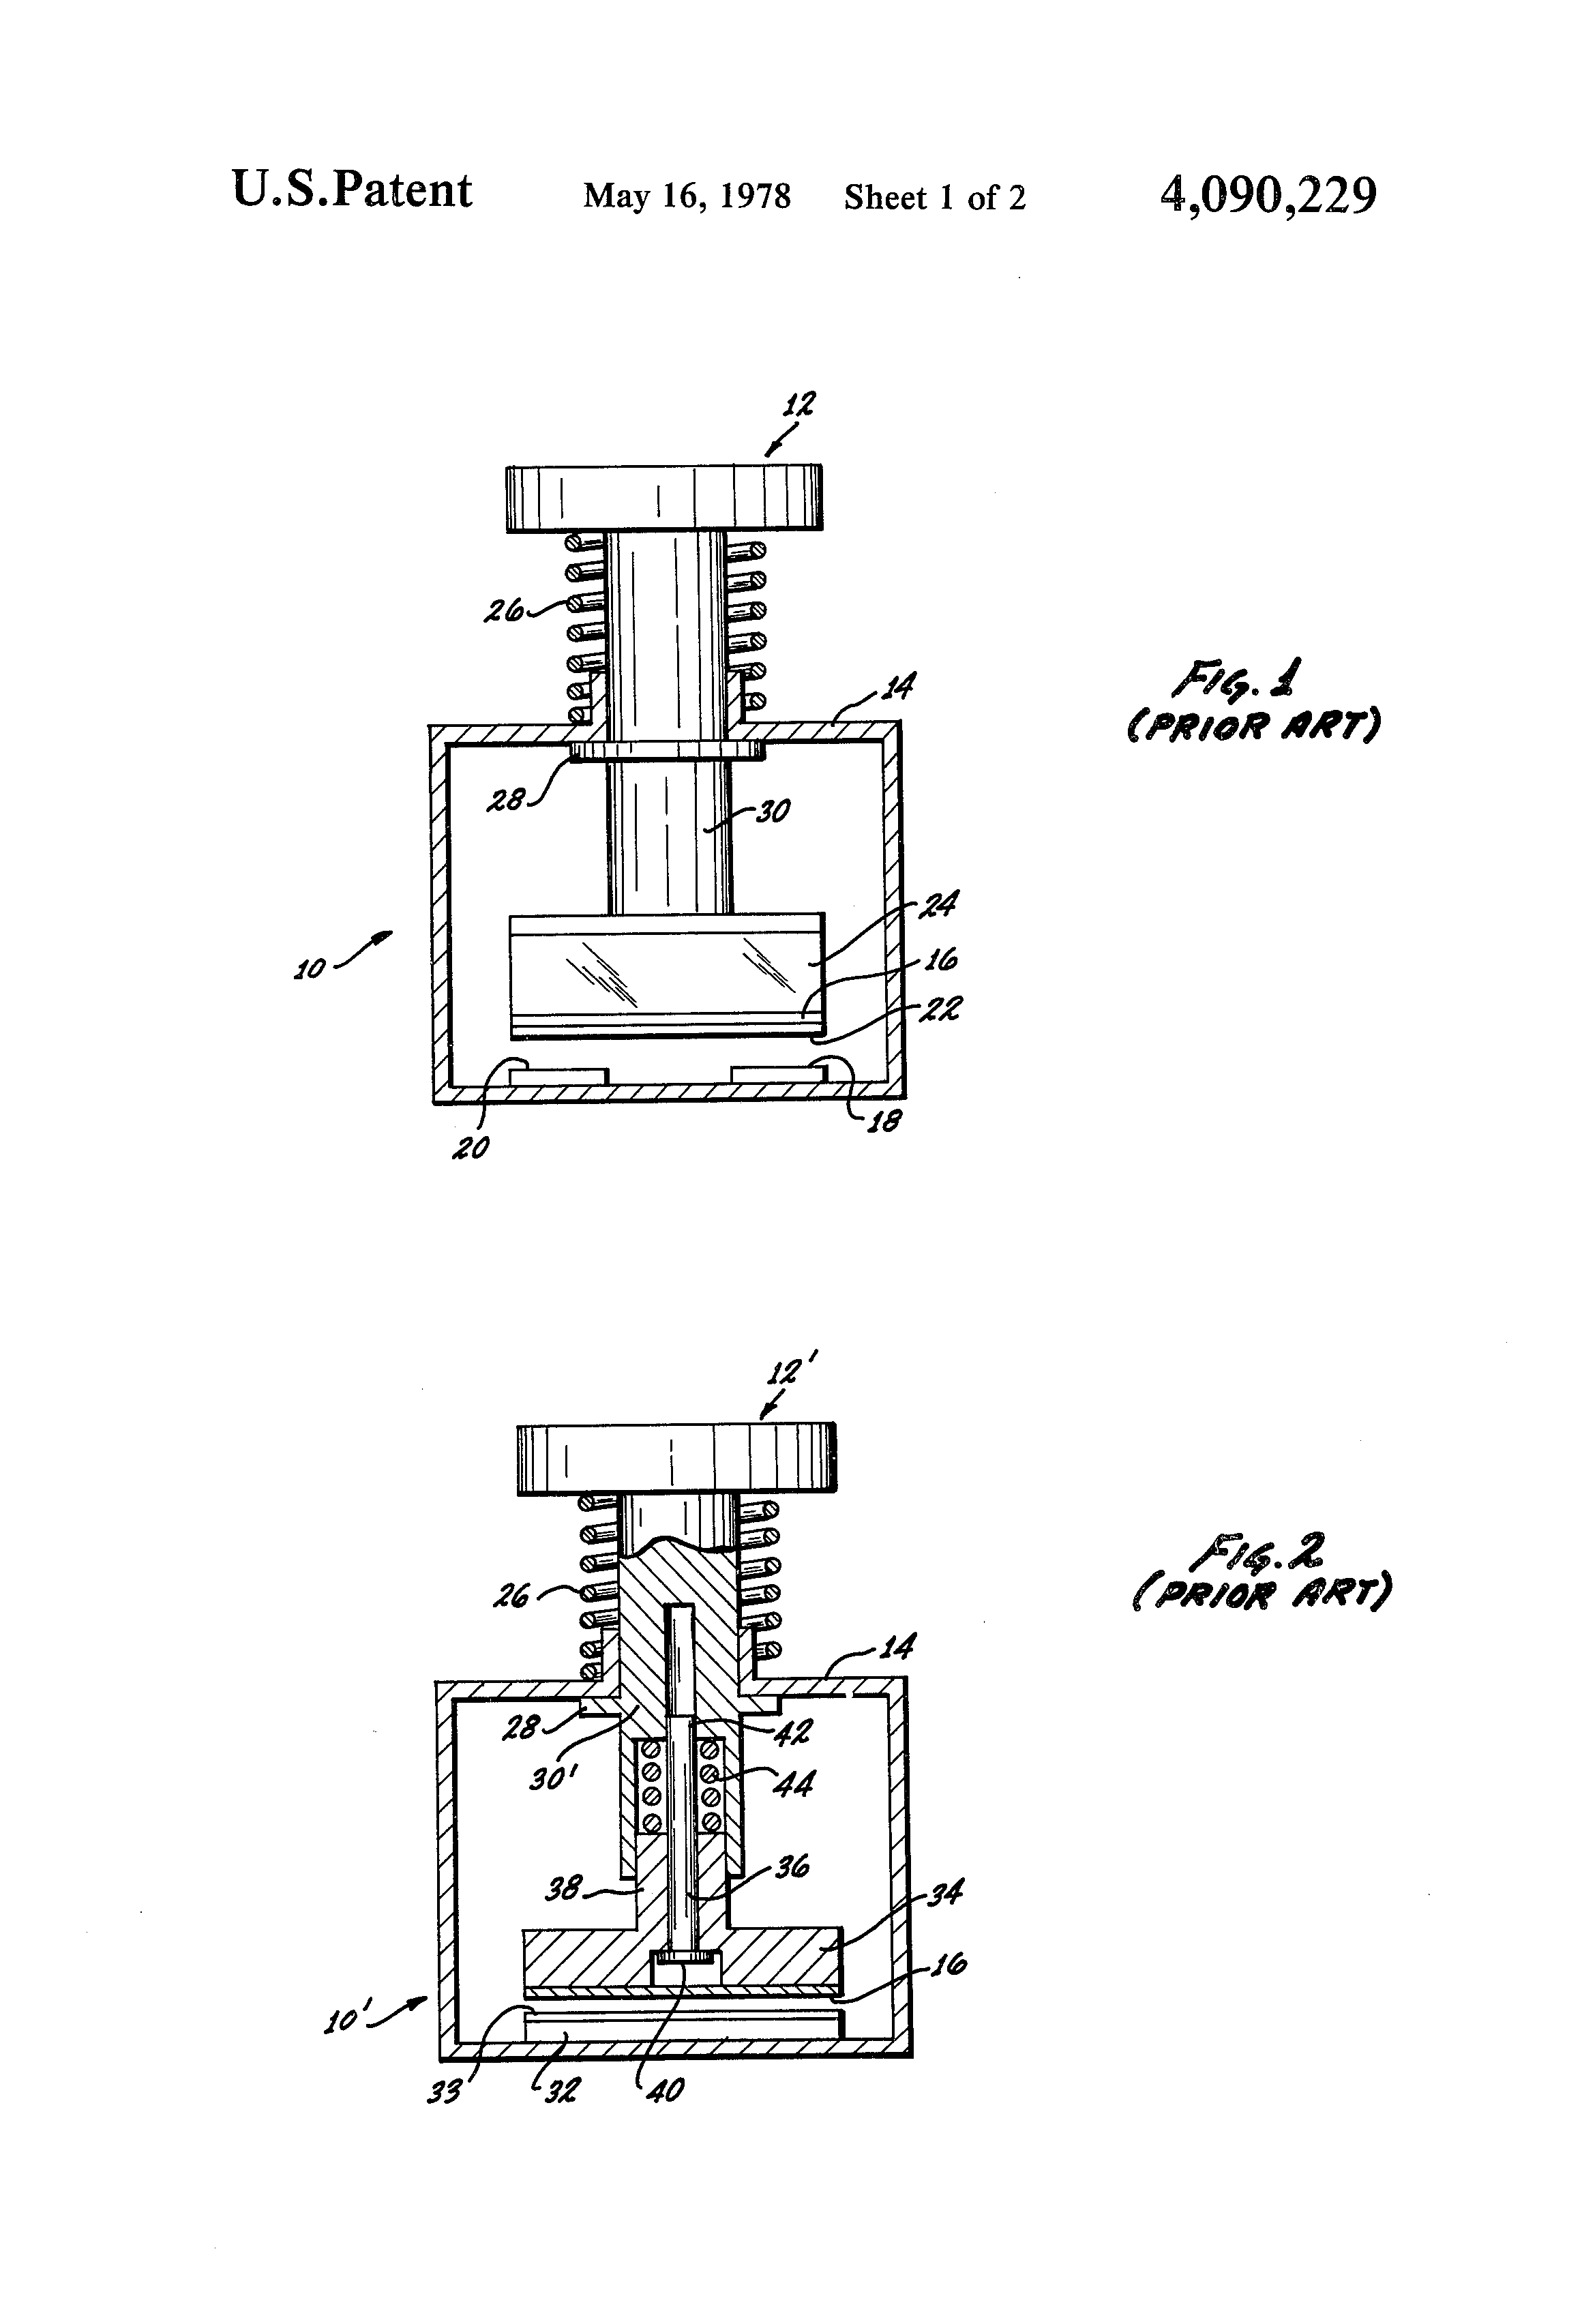 Patent Image #2